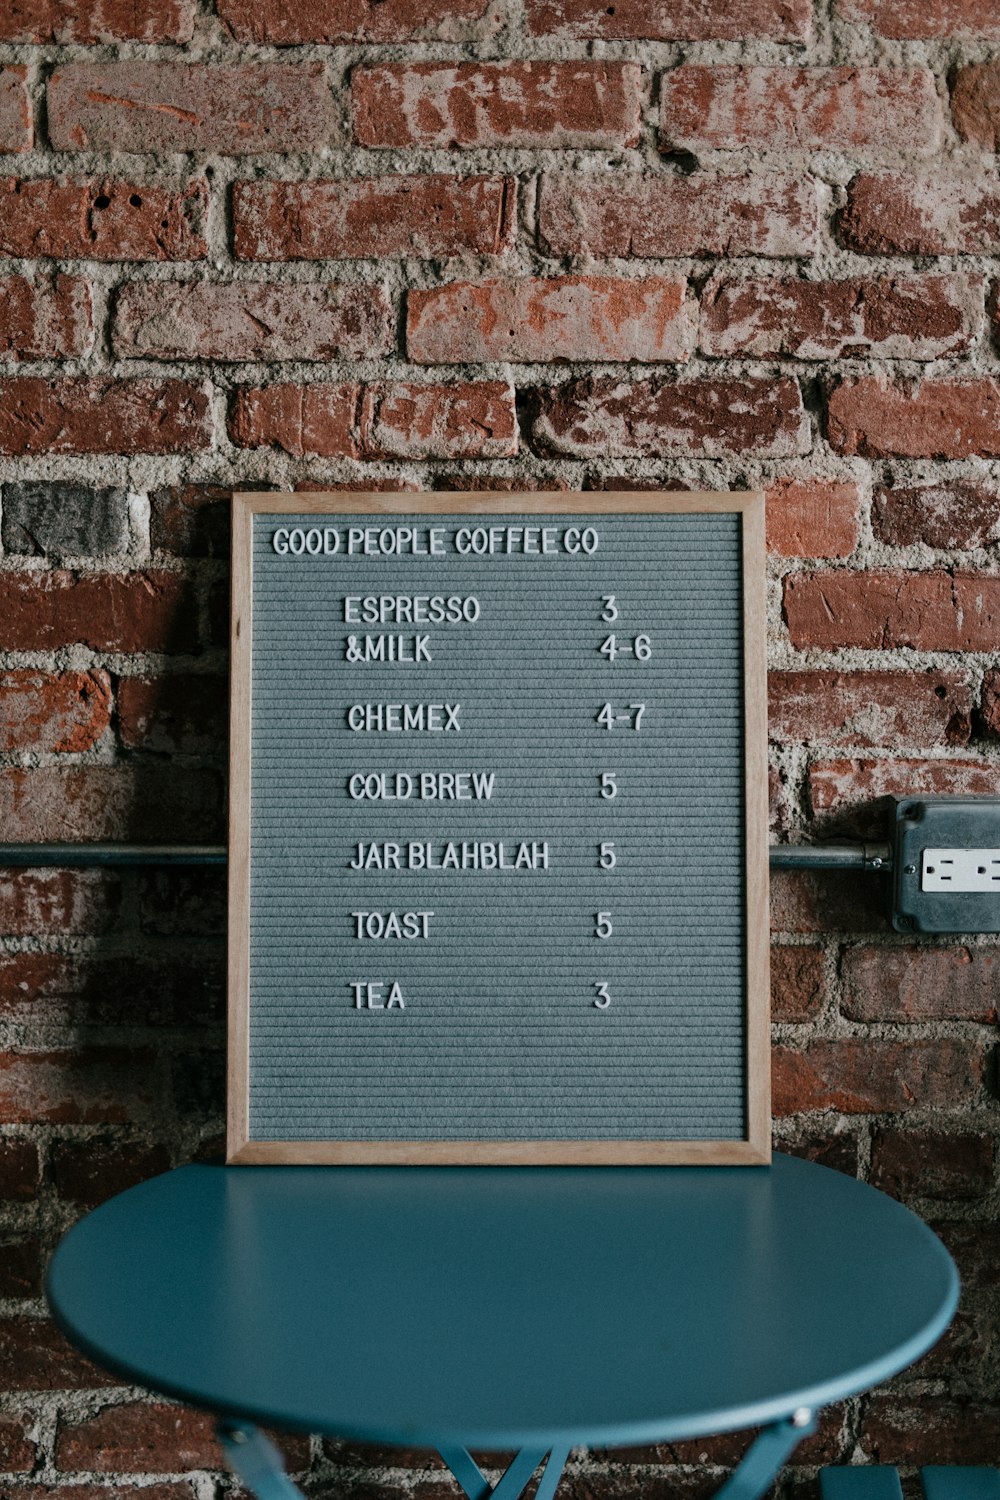 good people coffee co menu board on top of blue table